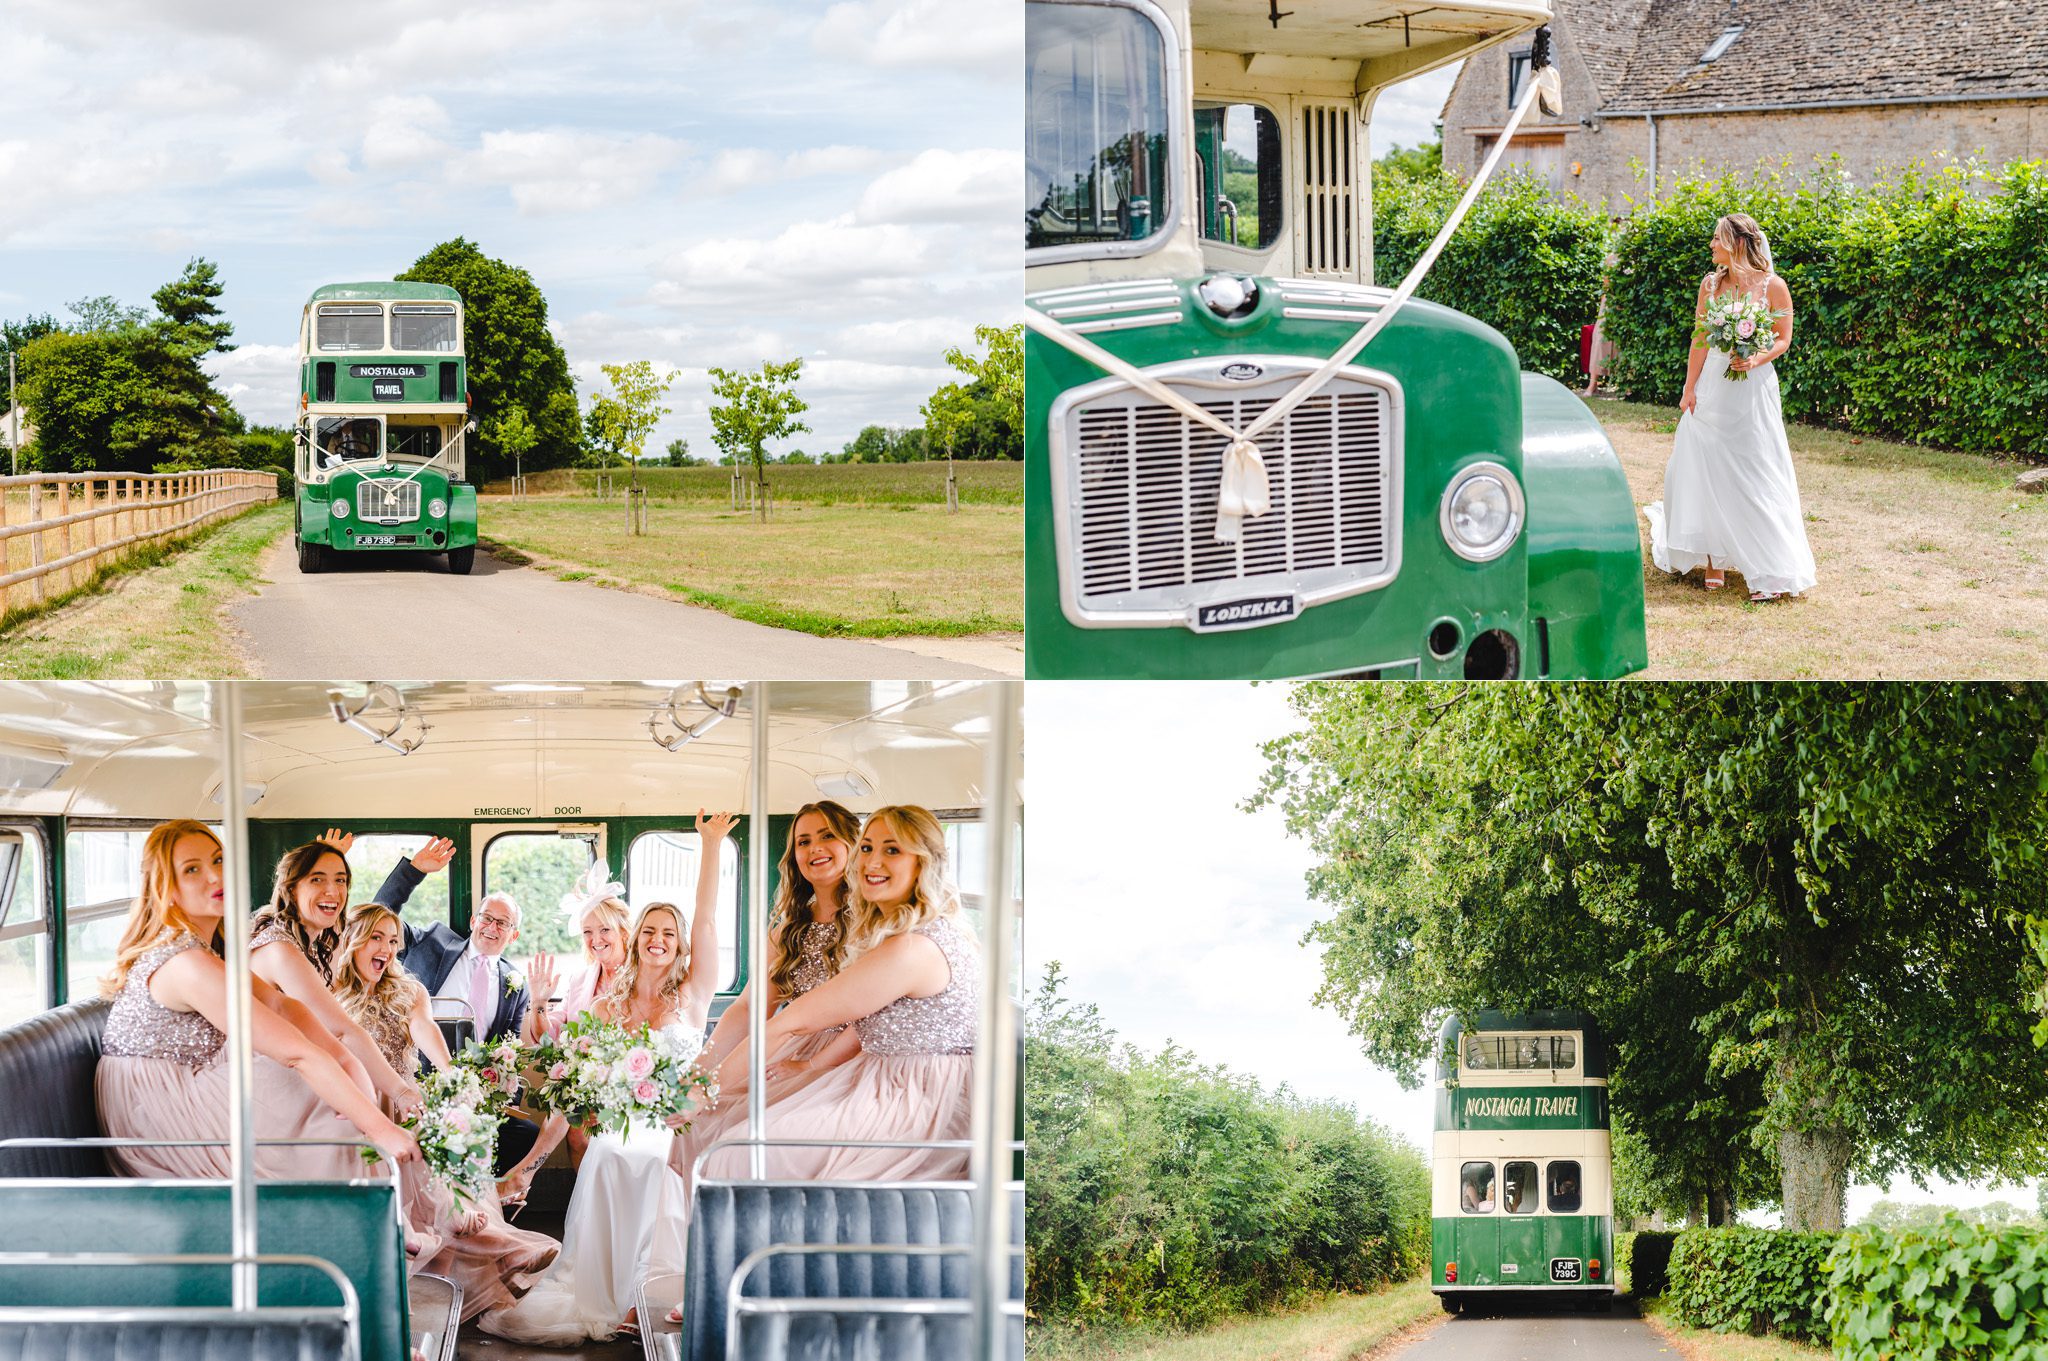 Big green Lodekka bus taking the bridemaids to the wedding